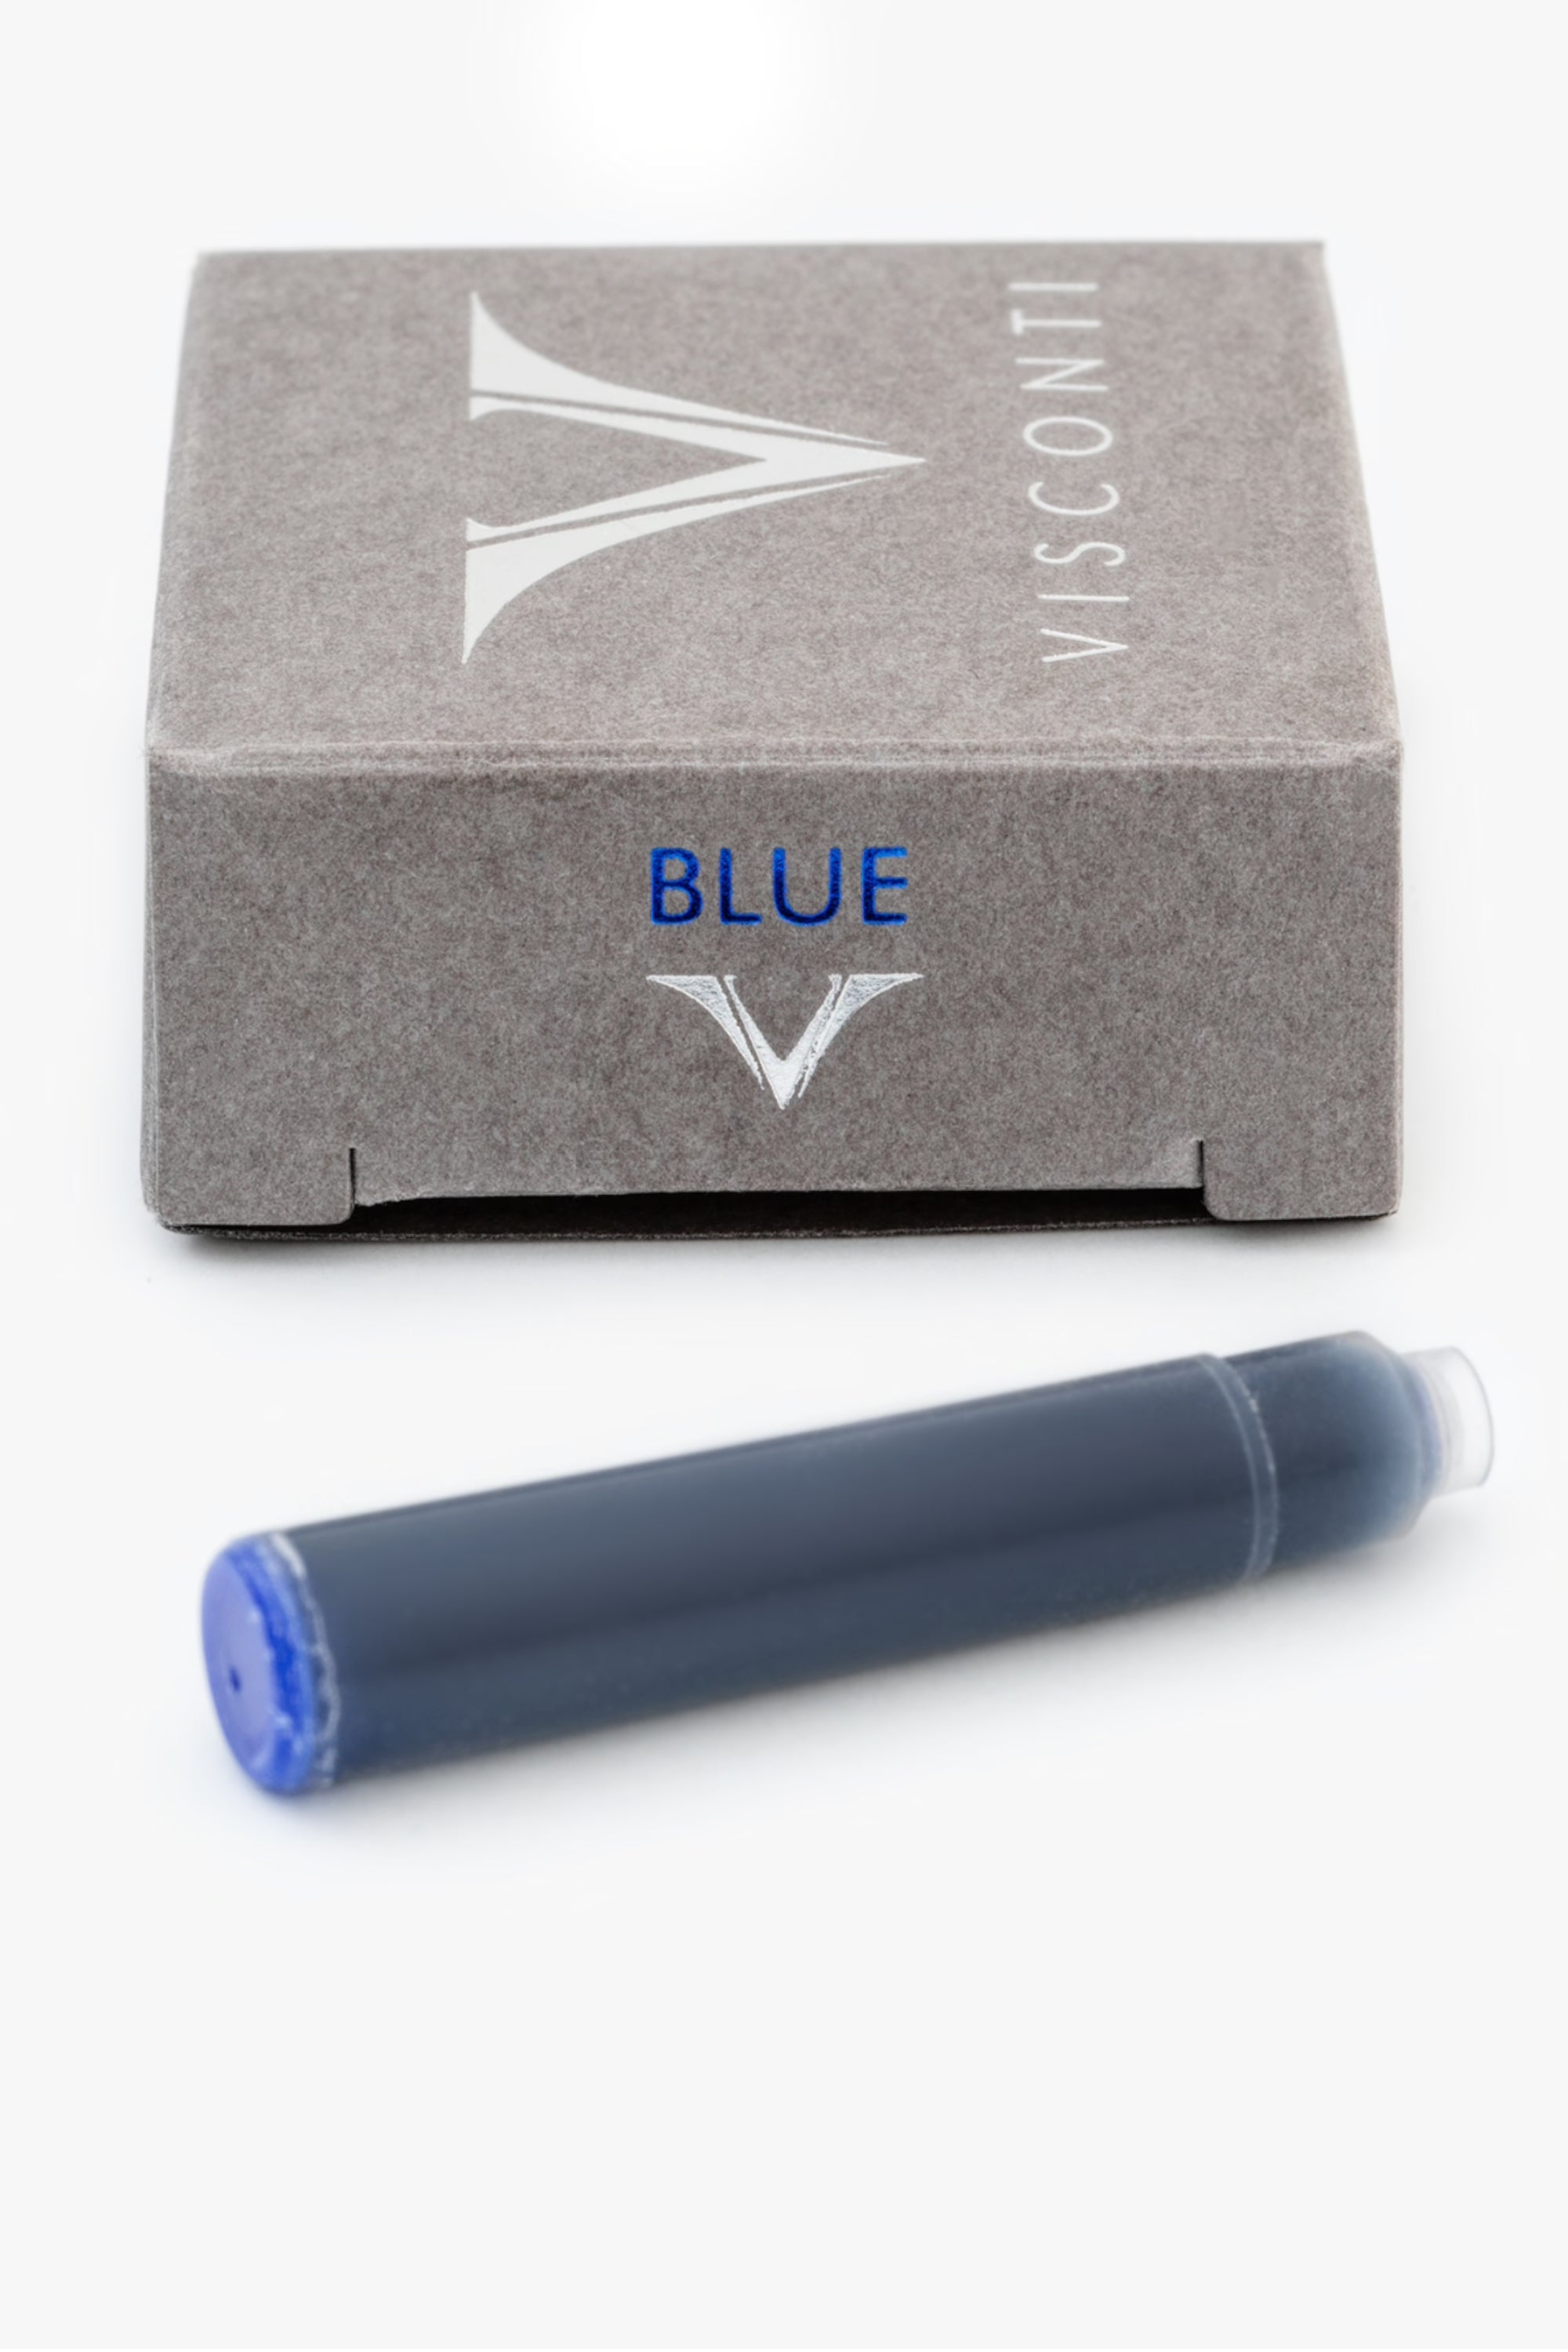 Visconti Blue Ink Cartridges. Standard International Short - box of 10